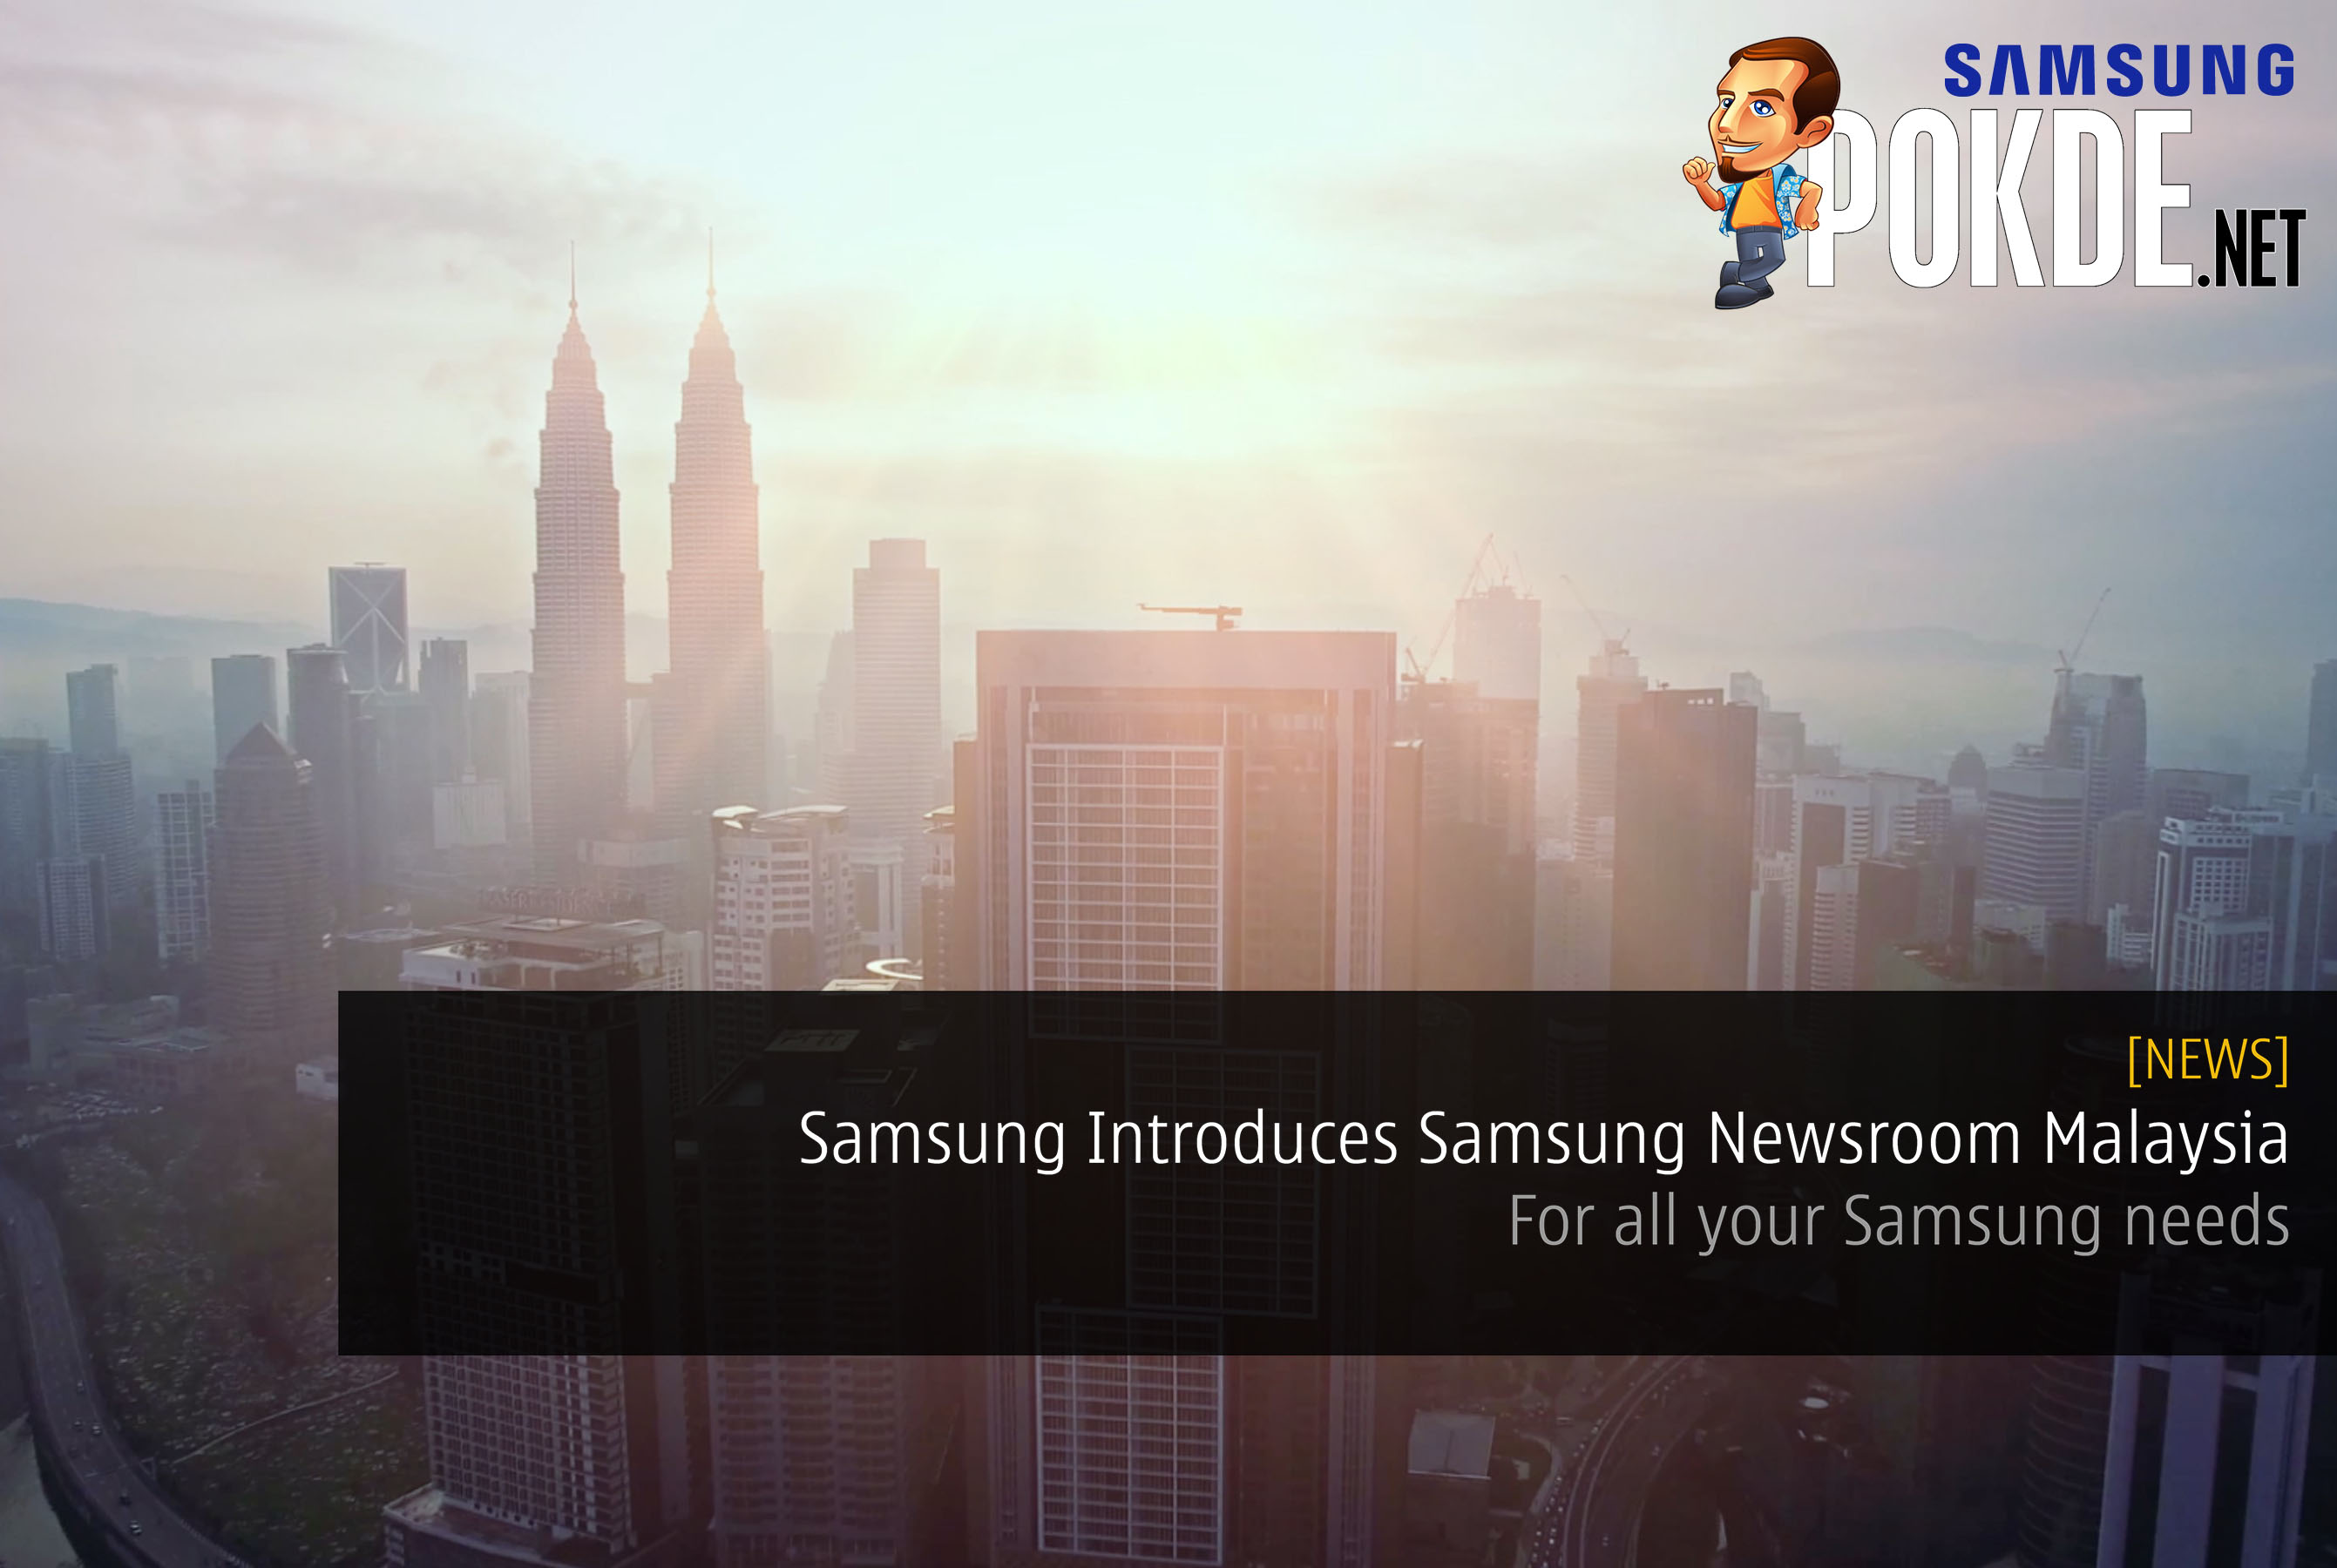 Samsung Introduces Samsung Newsroom Malaysia - For all your Samsung needs 24